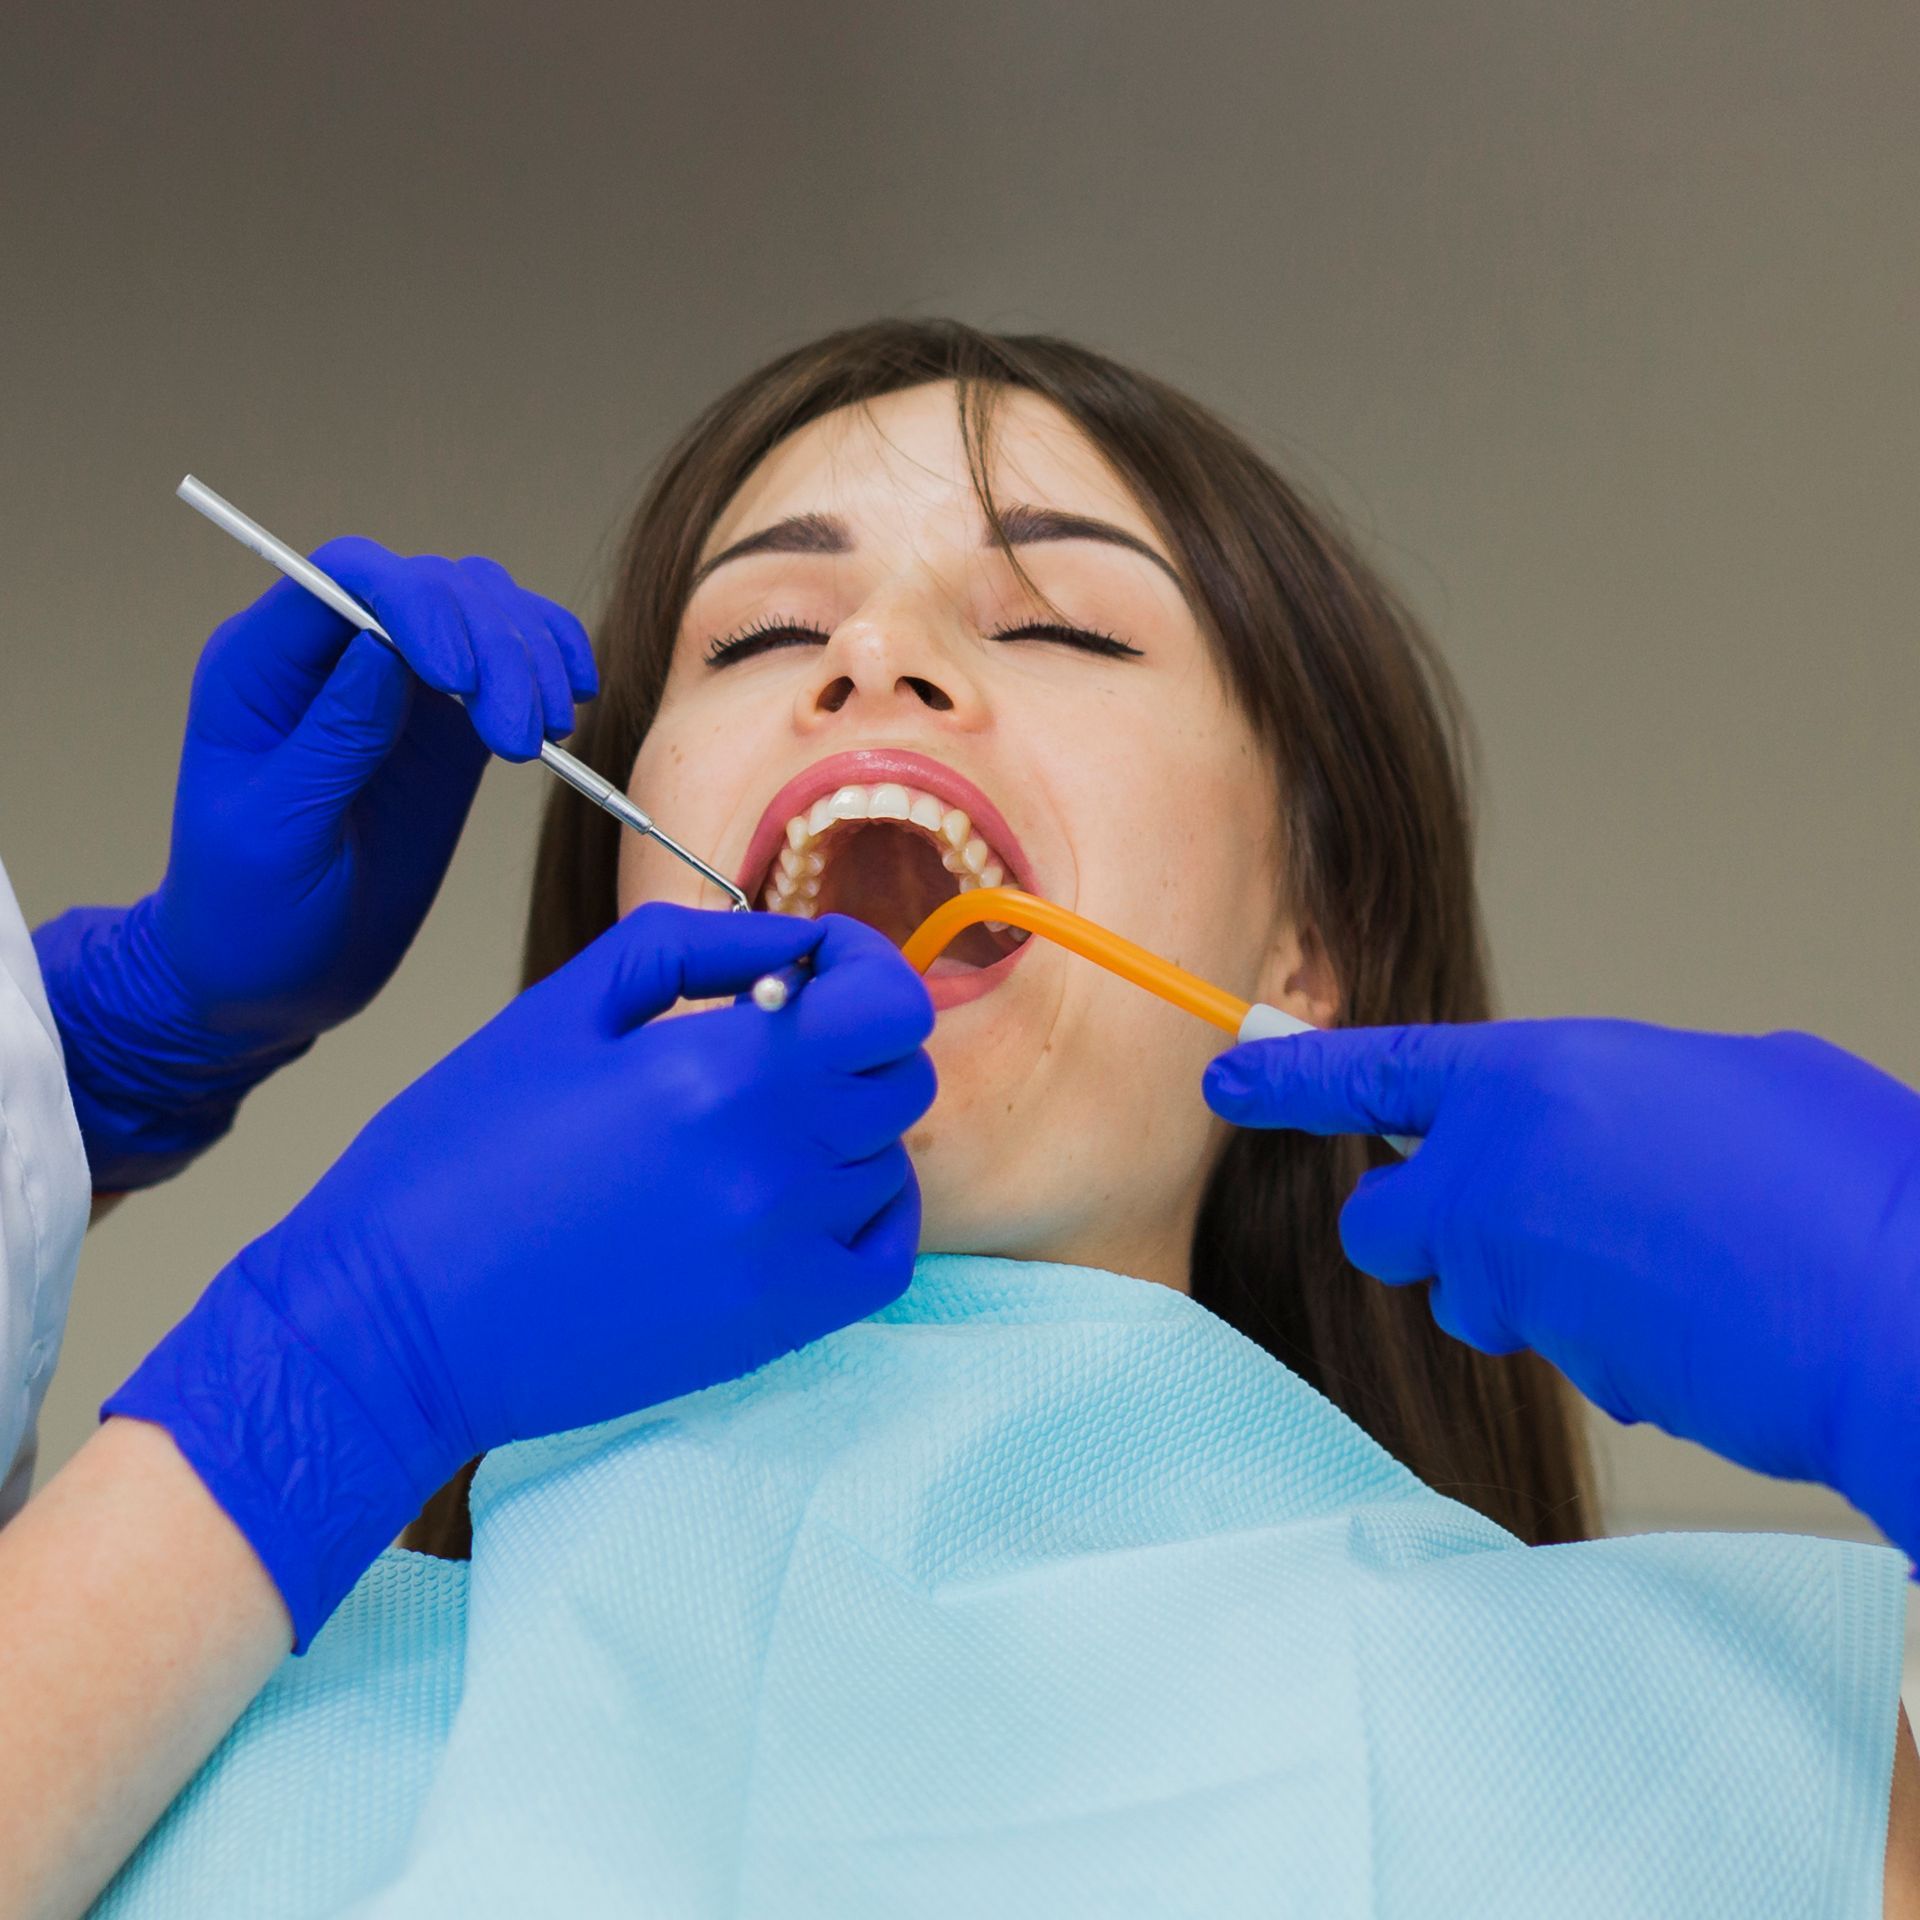 Teeth cleaning dentist
